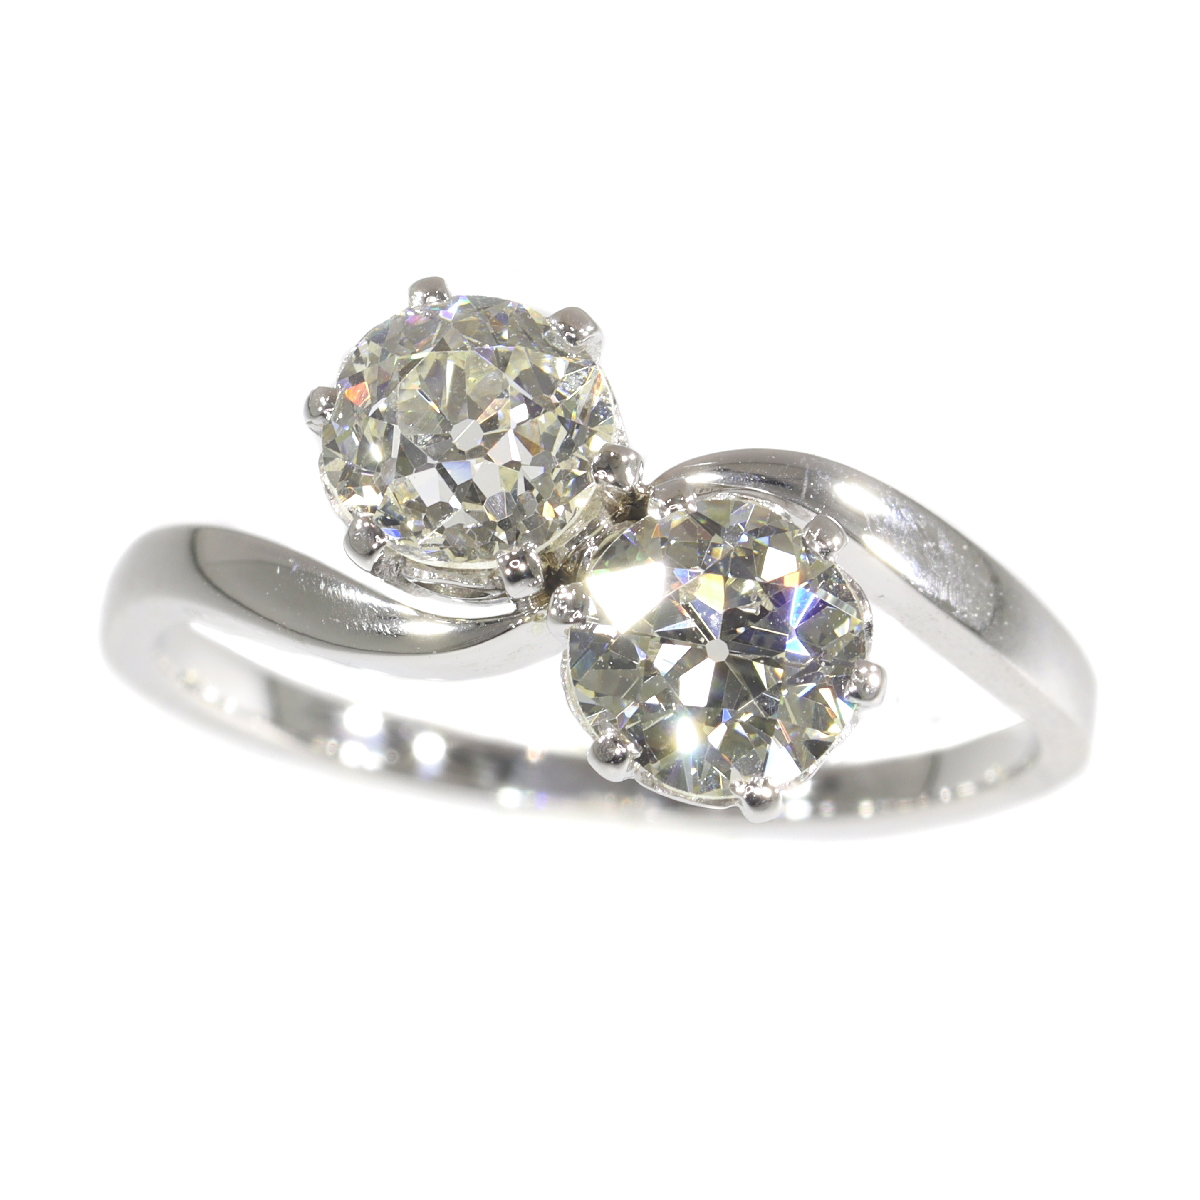 Capturing Vintage Love's Essence: Toi et Moi Ring with Vintage Diamonds